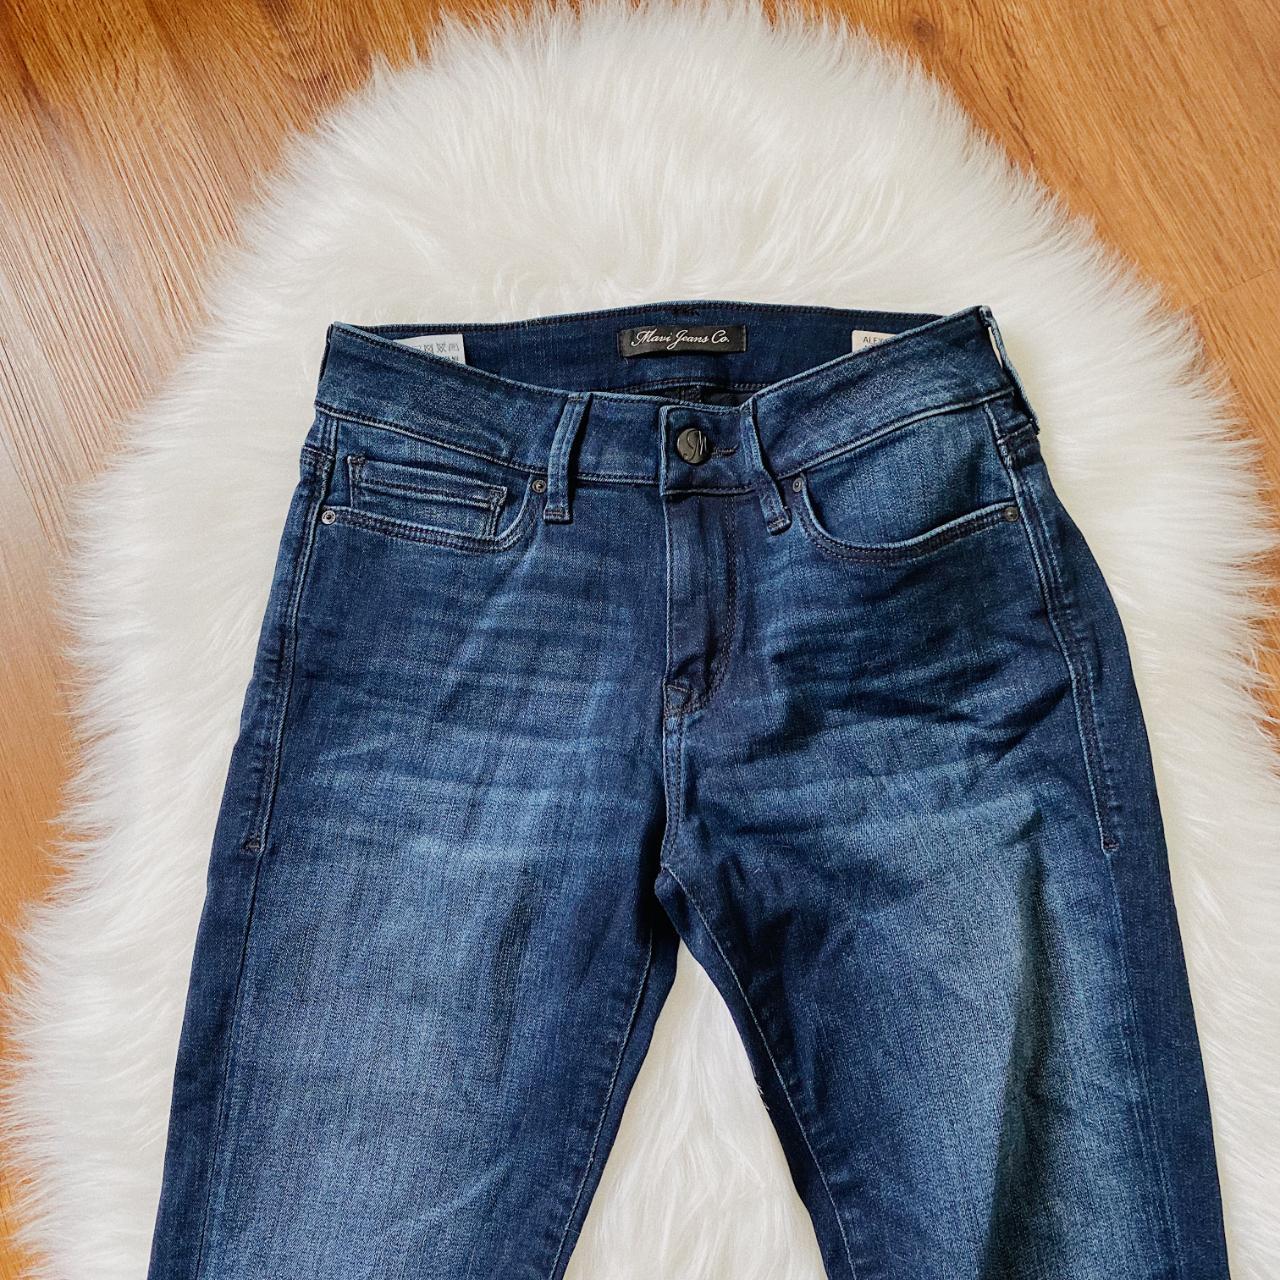 Product Image 3 - Mavi jeans co size 25